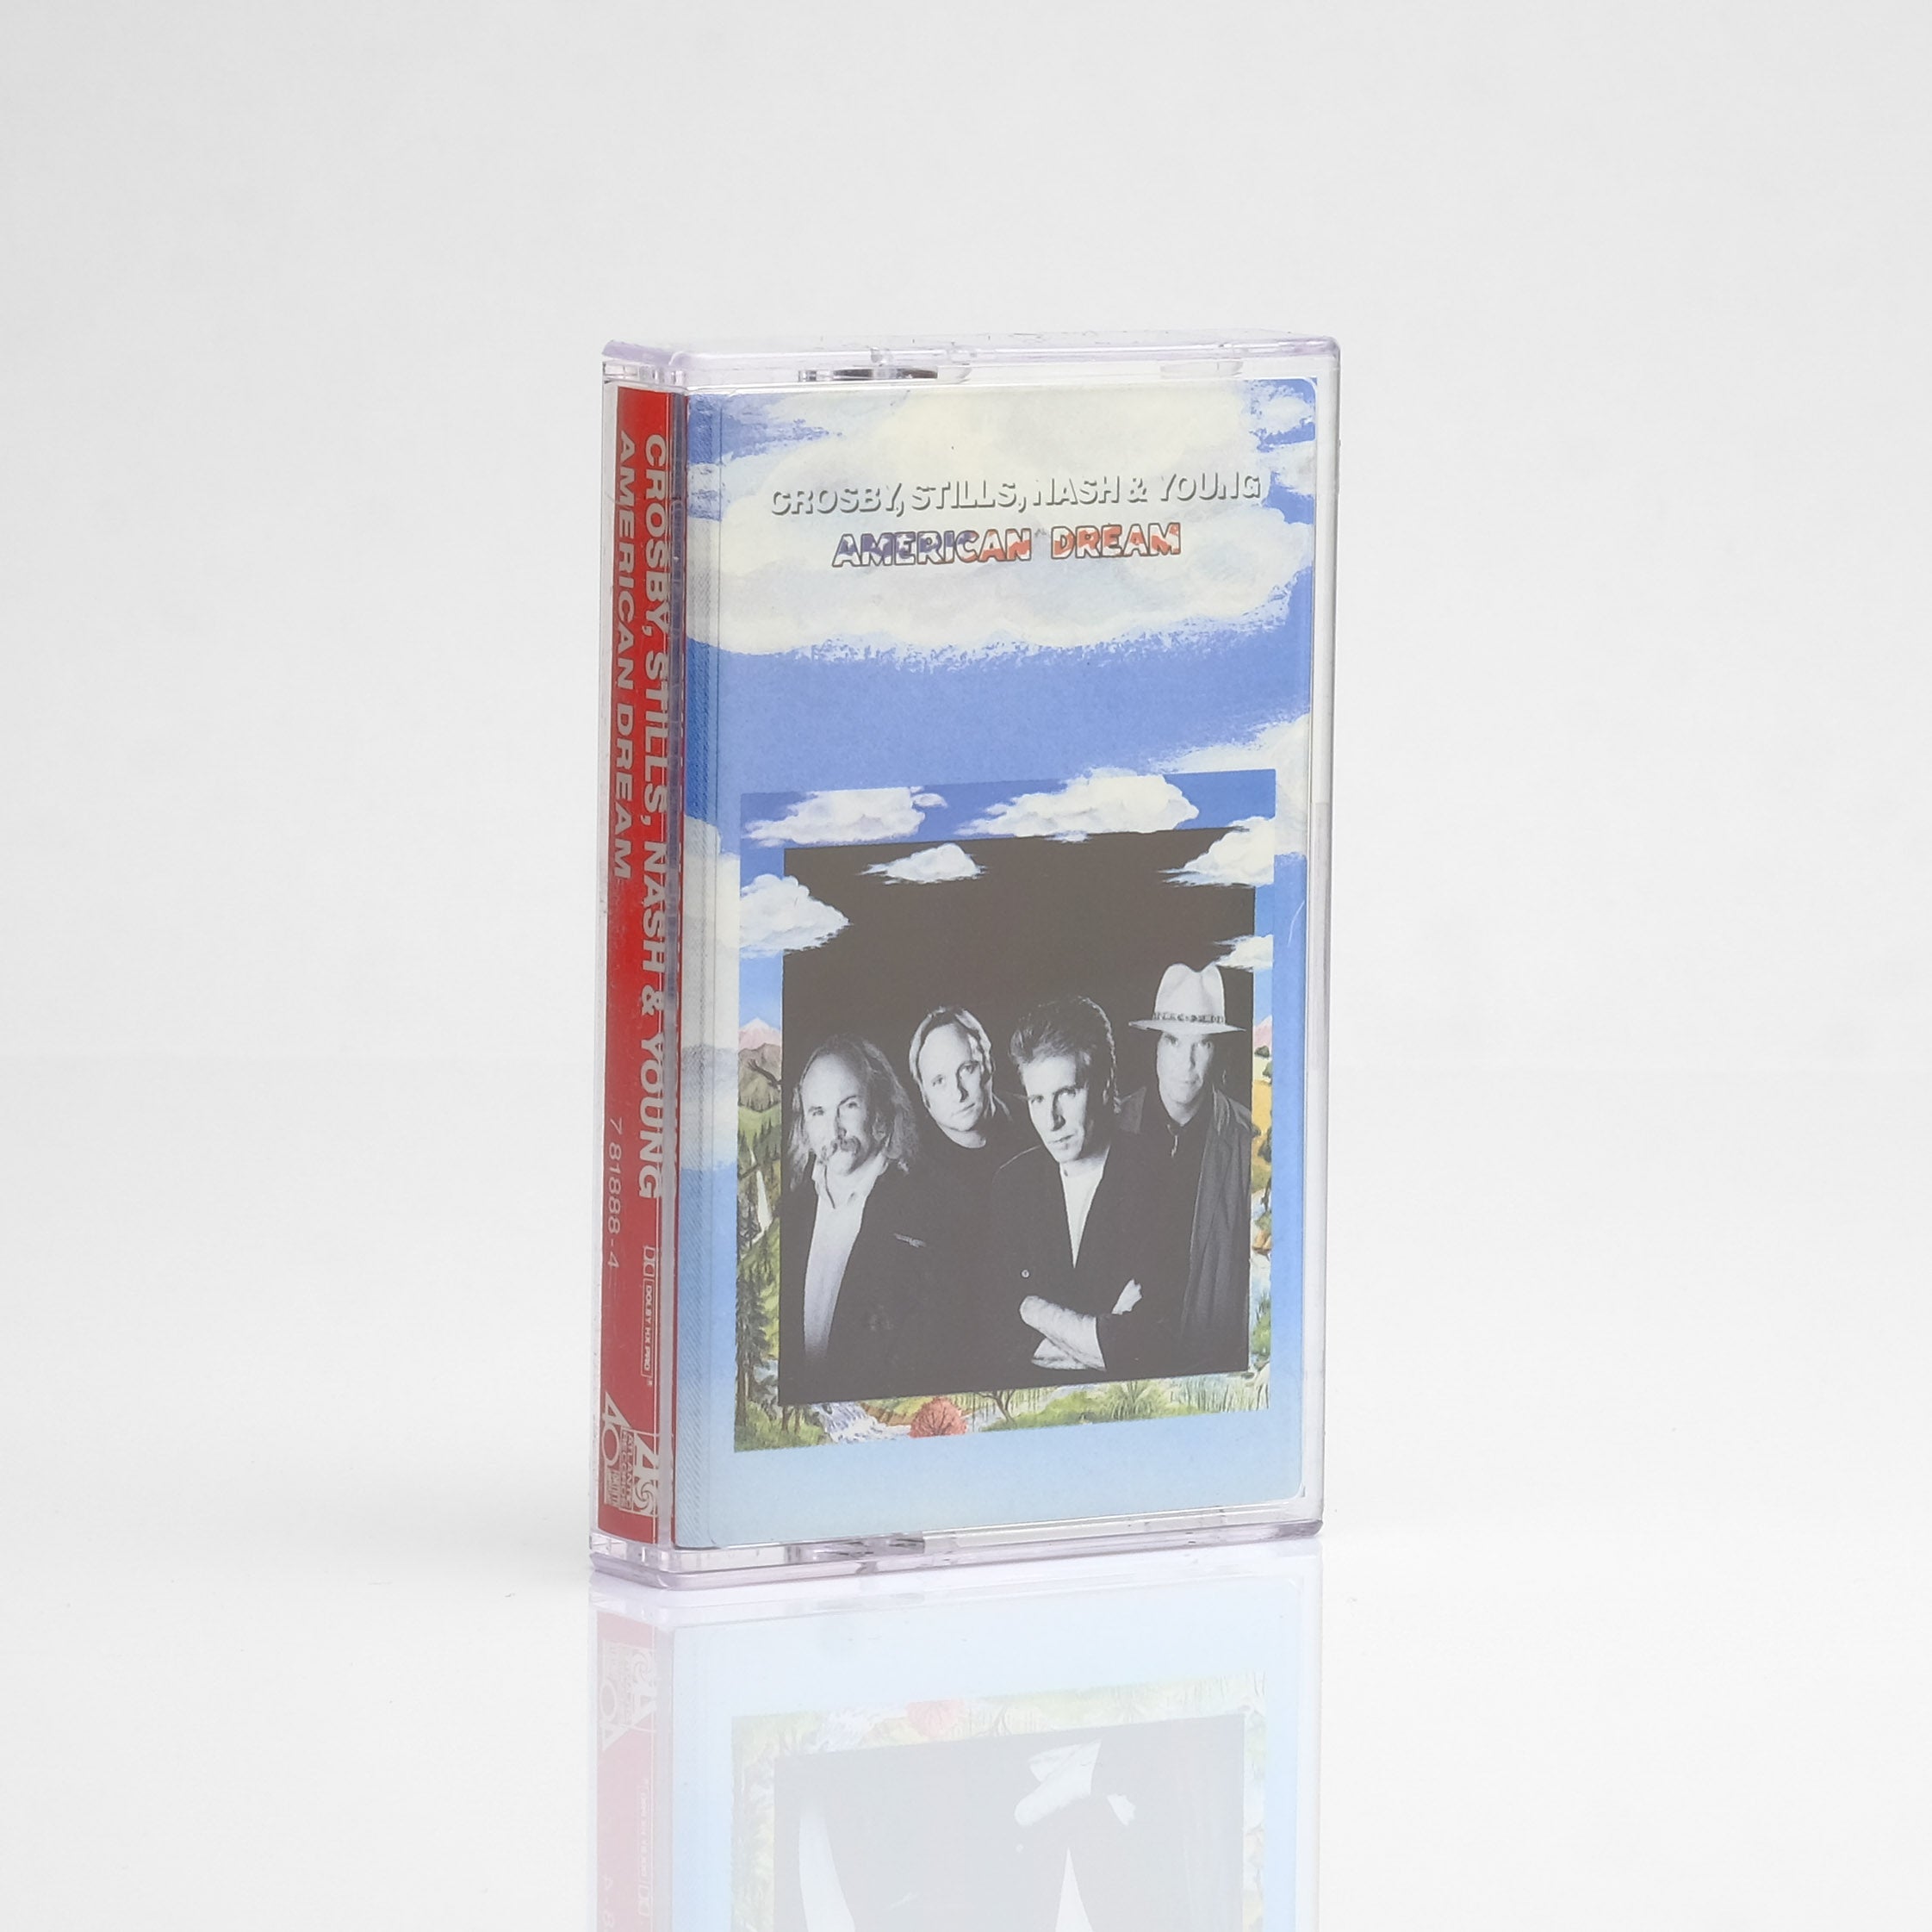 Crosby, Stills, Nash & Young - American Dream Cassette Tape